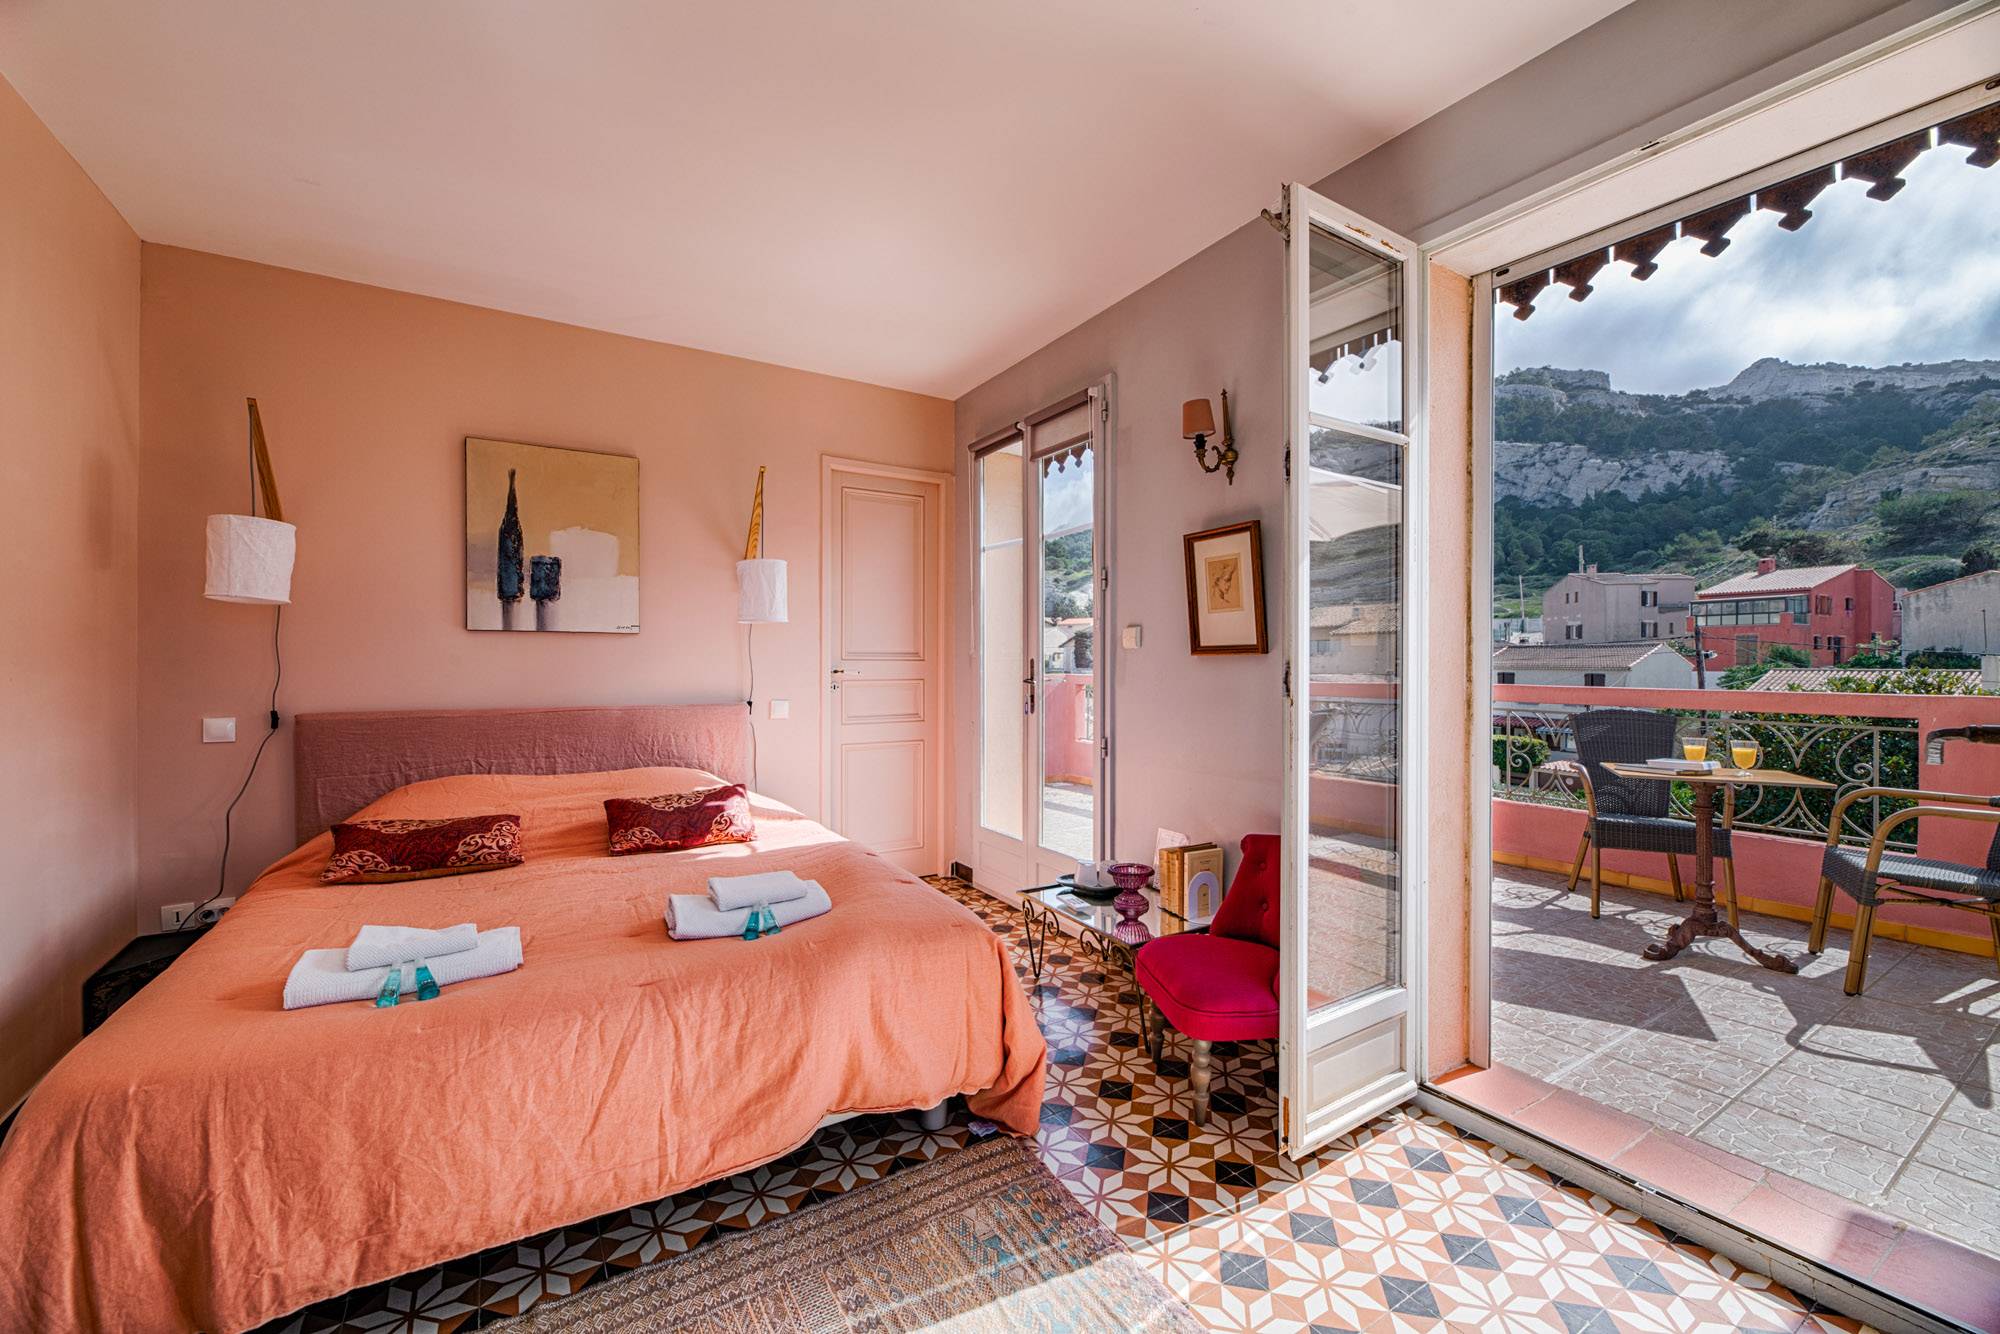 Location chambre d'hôtes Muscade avec vue mer et massif des Calanques de Marseille